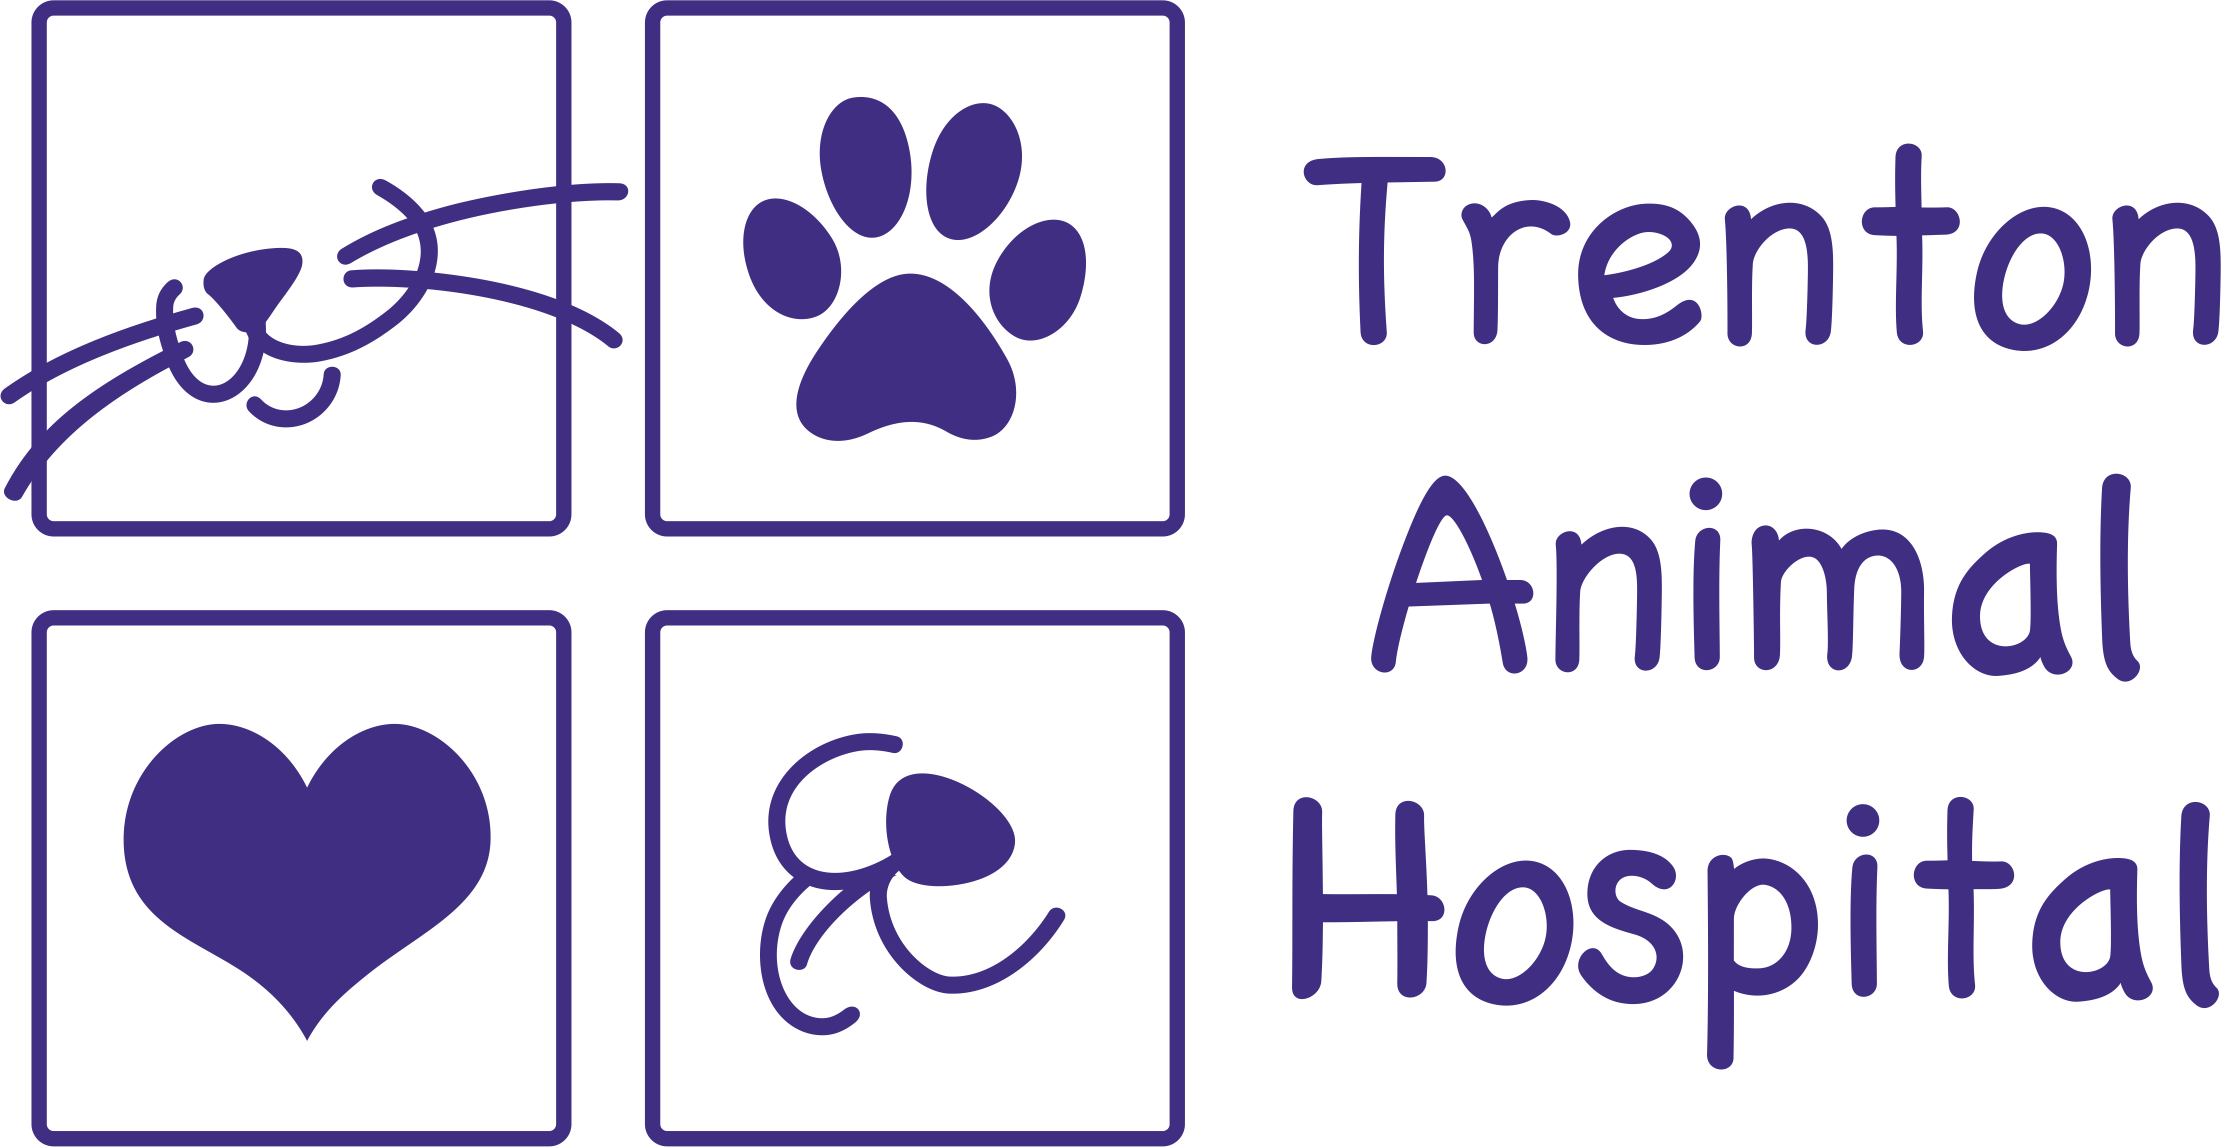 Trenton Animal Hospital